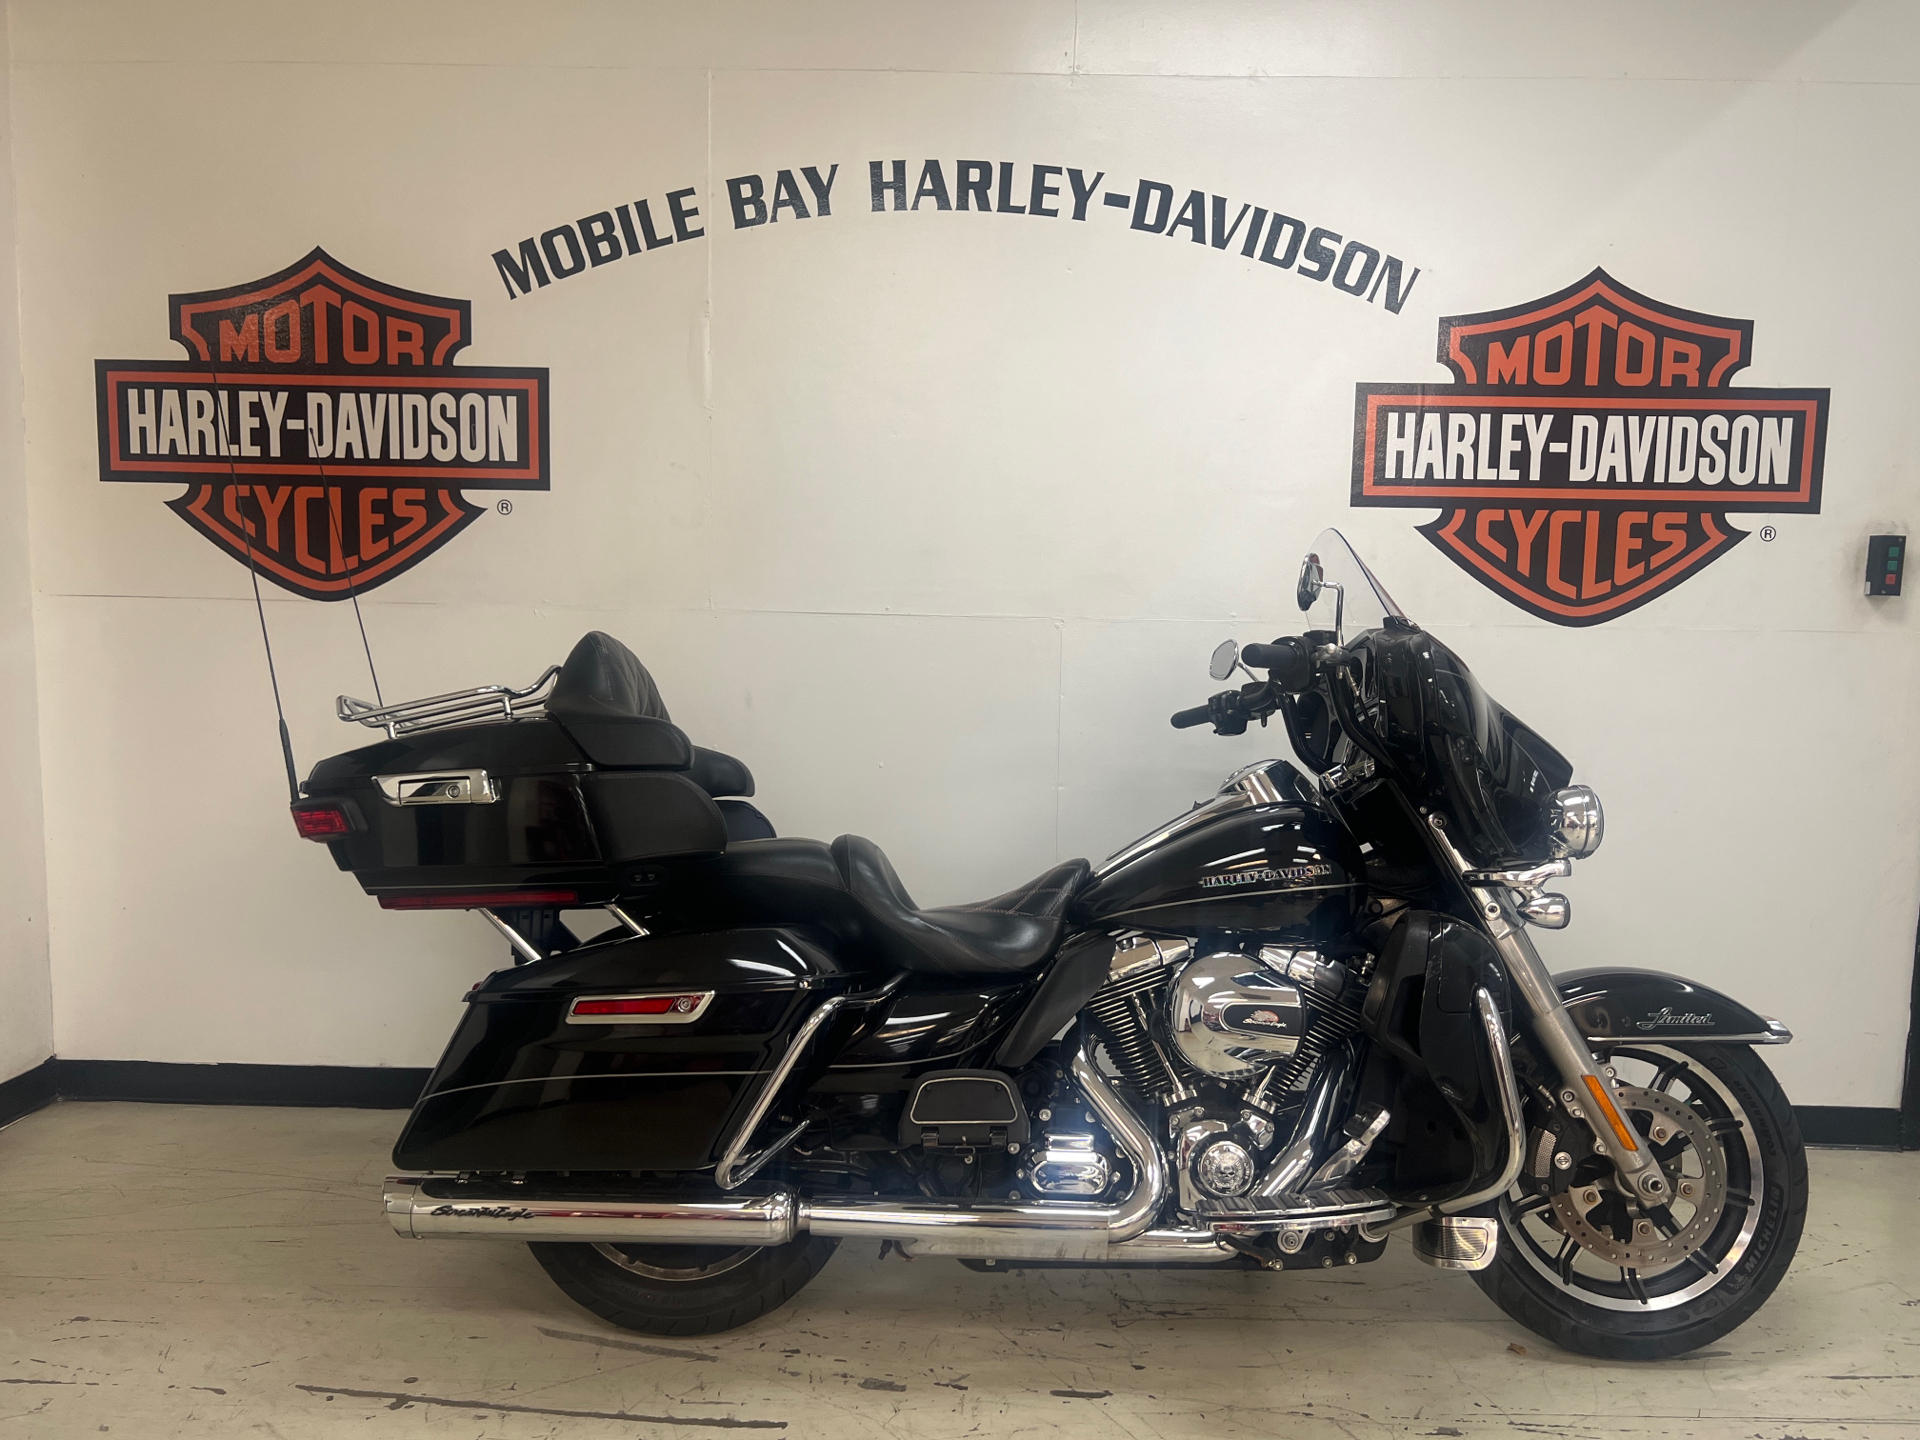 2014 Harley-Davidson Ultra Limited in Mobile, Alabama - Photo 1